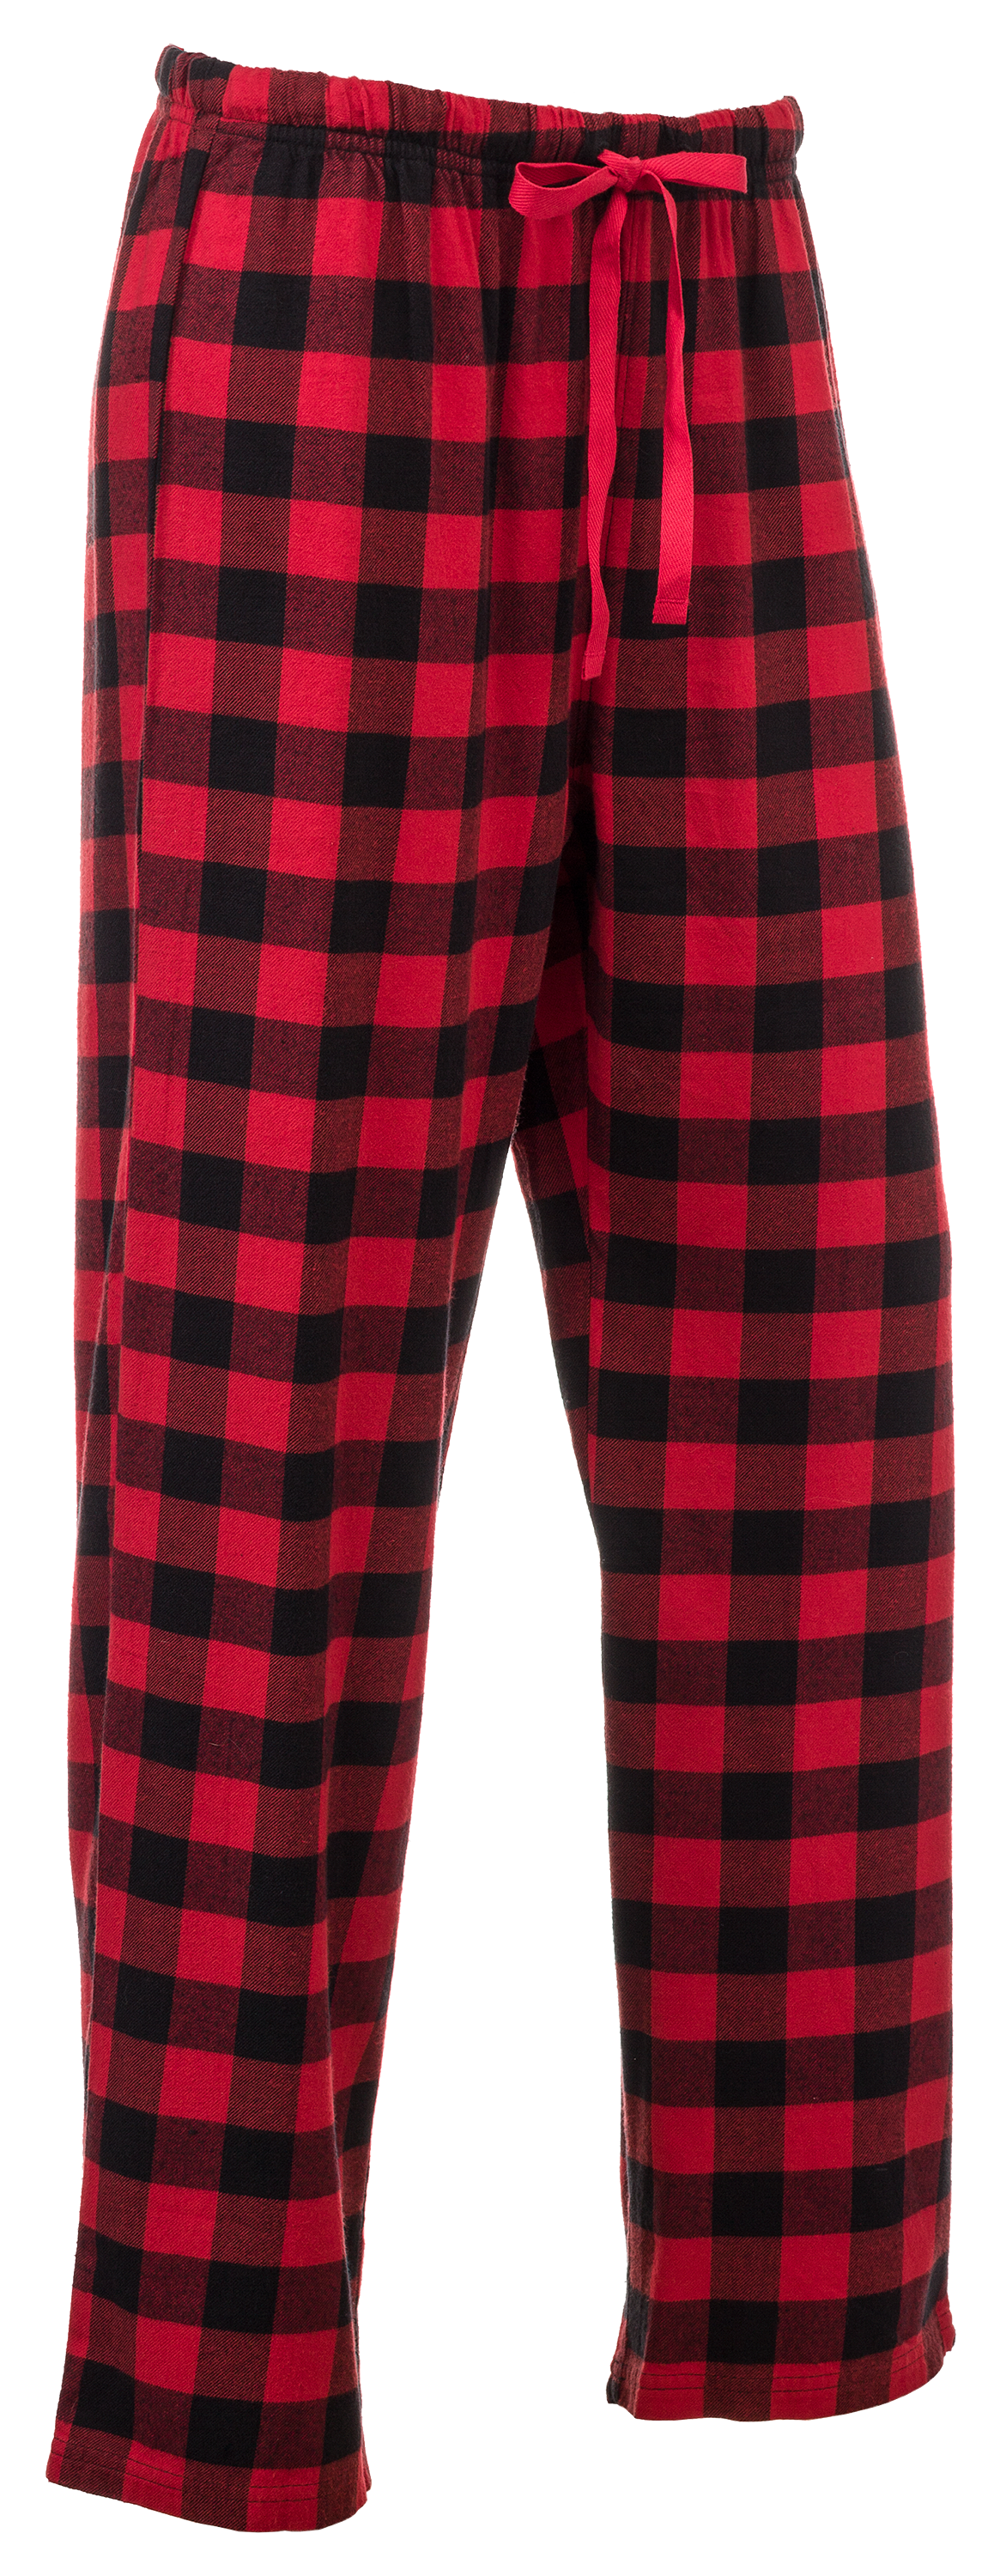 Woolrich First Light Yarn-Dye Flannel Pants for Ladies | Bass Pro Shops